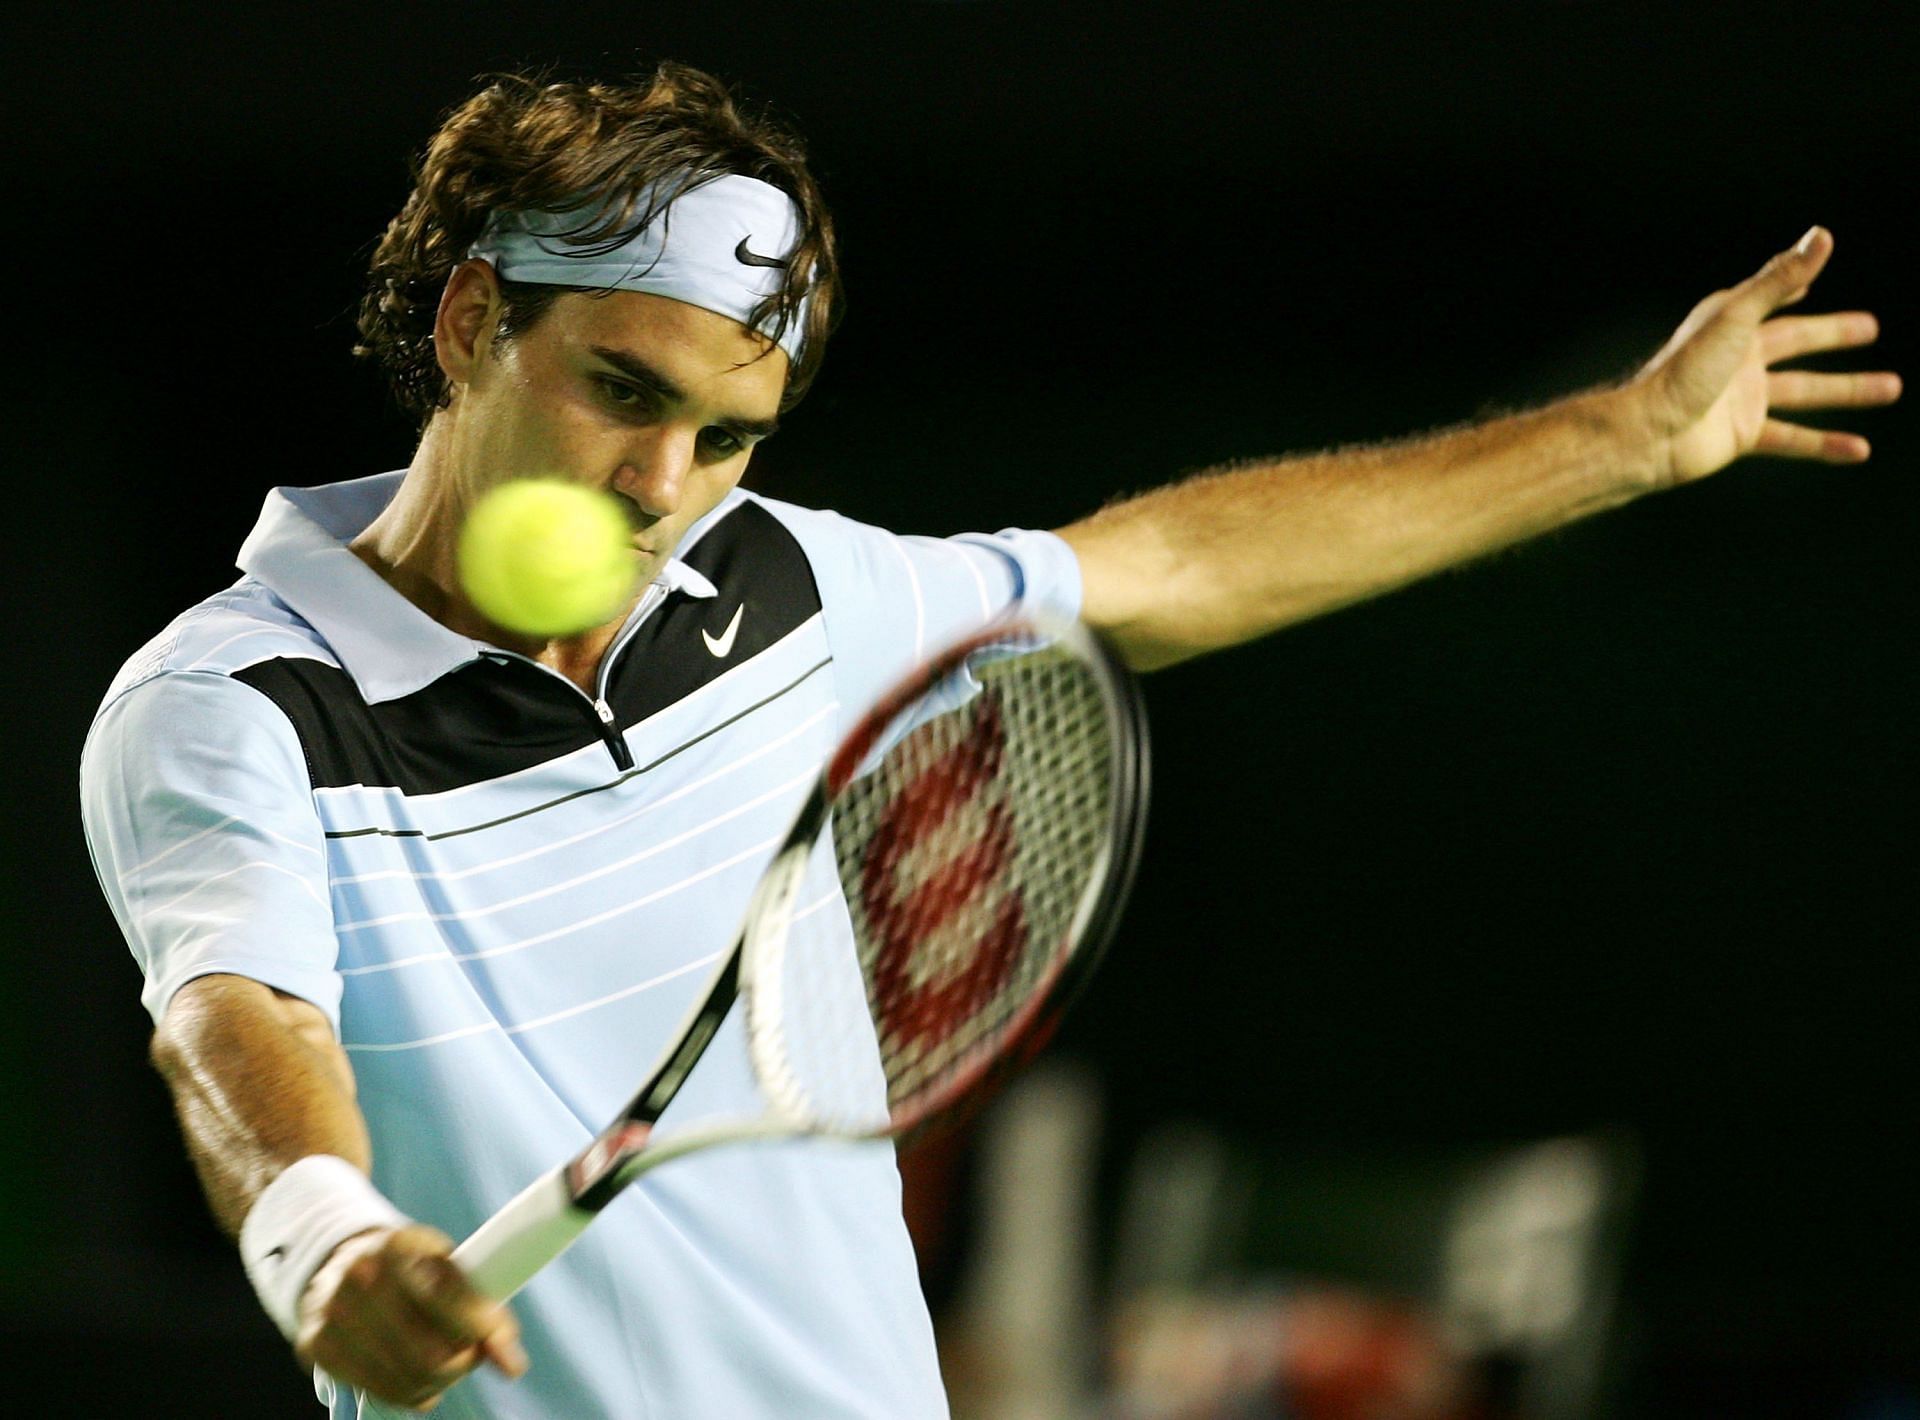 Australian Open 2007 - When Roger Federer breezed past the Serb